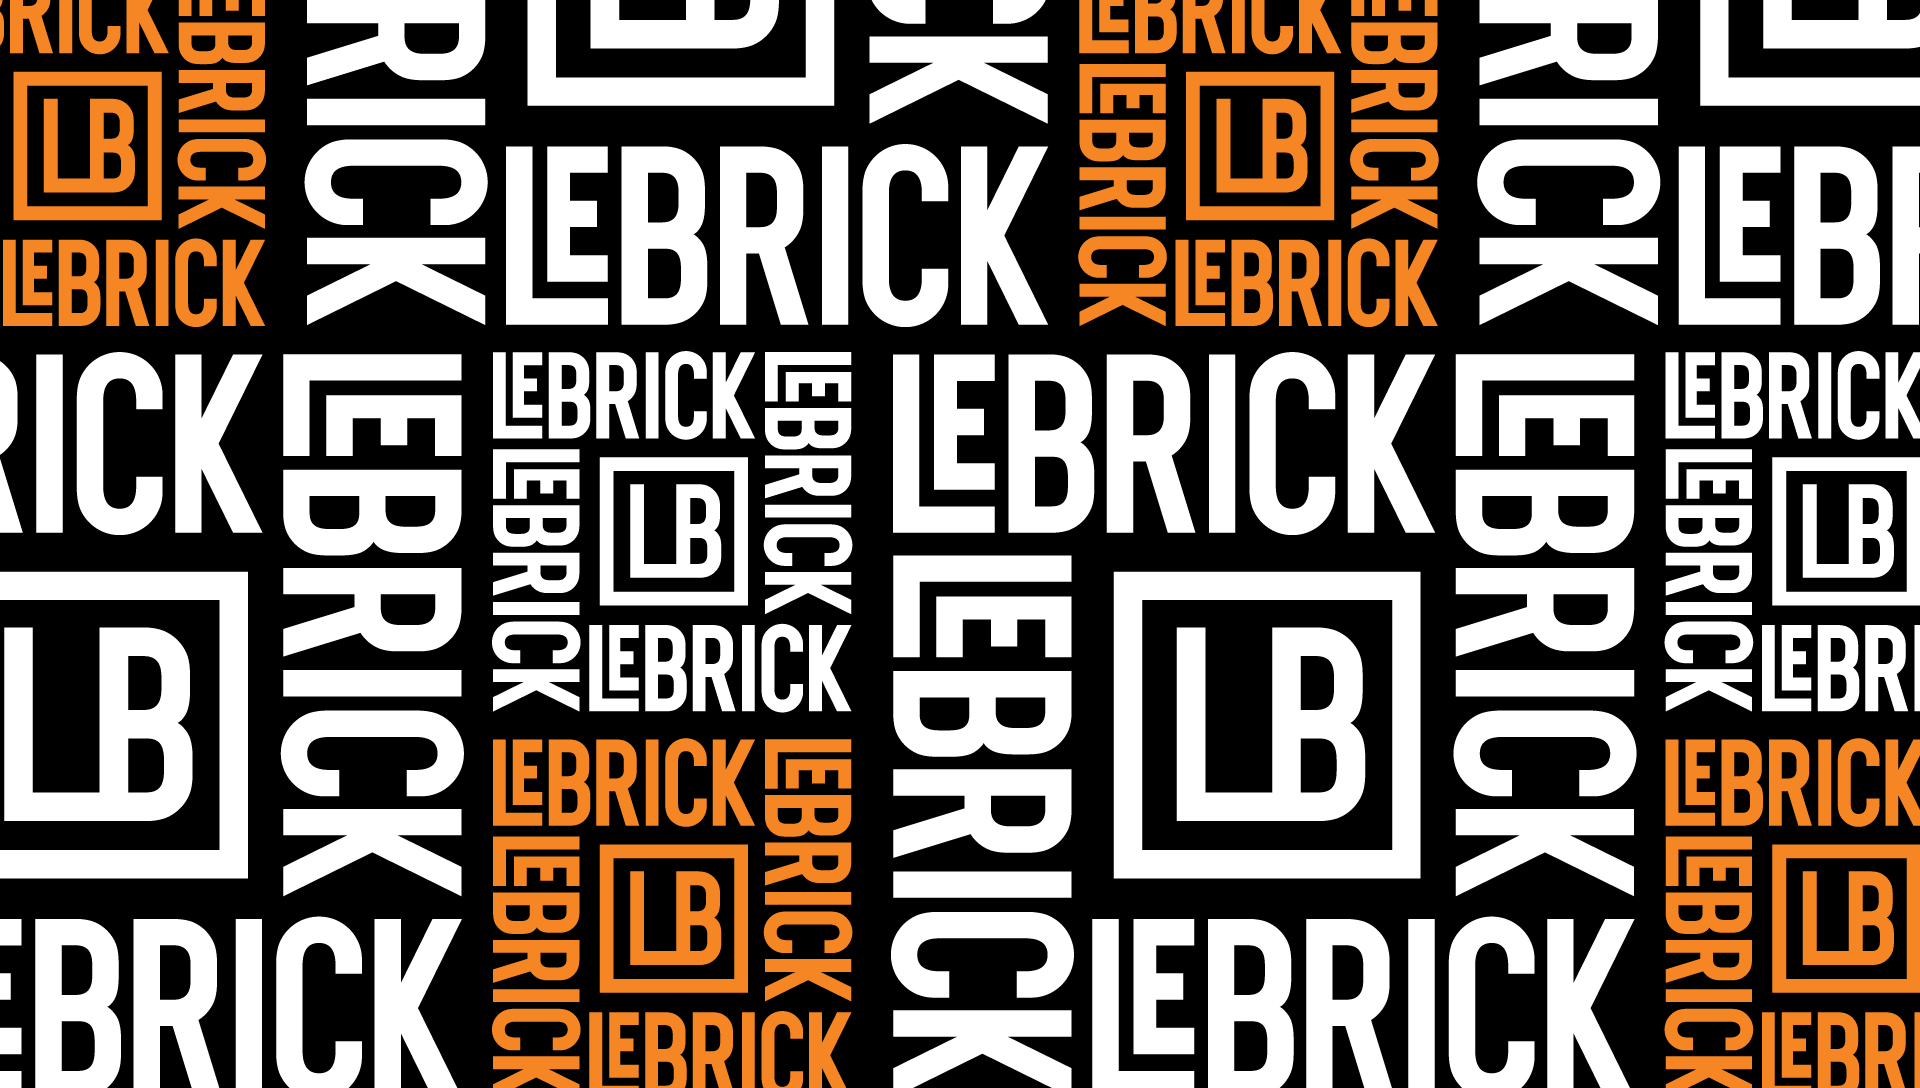 lebrick-7